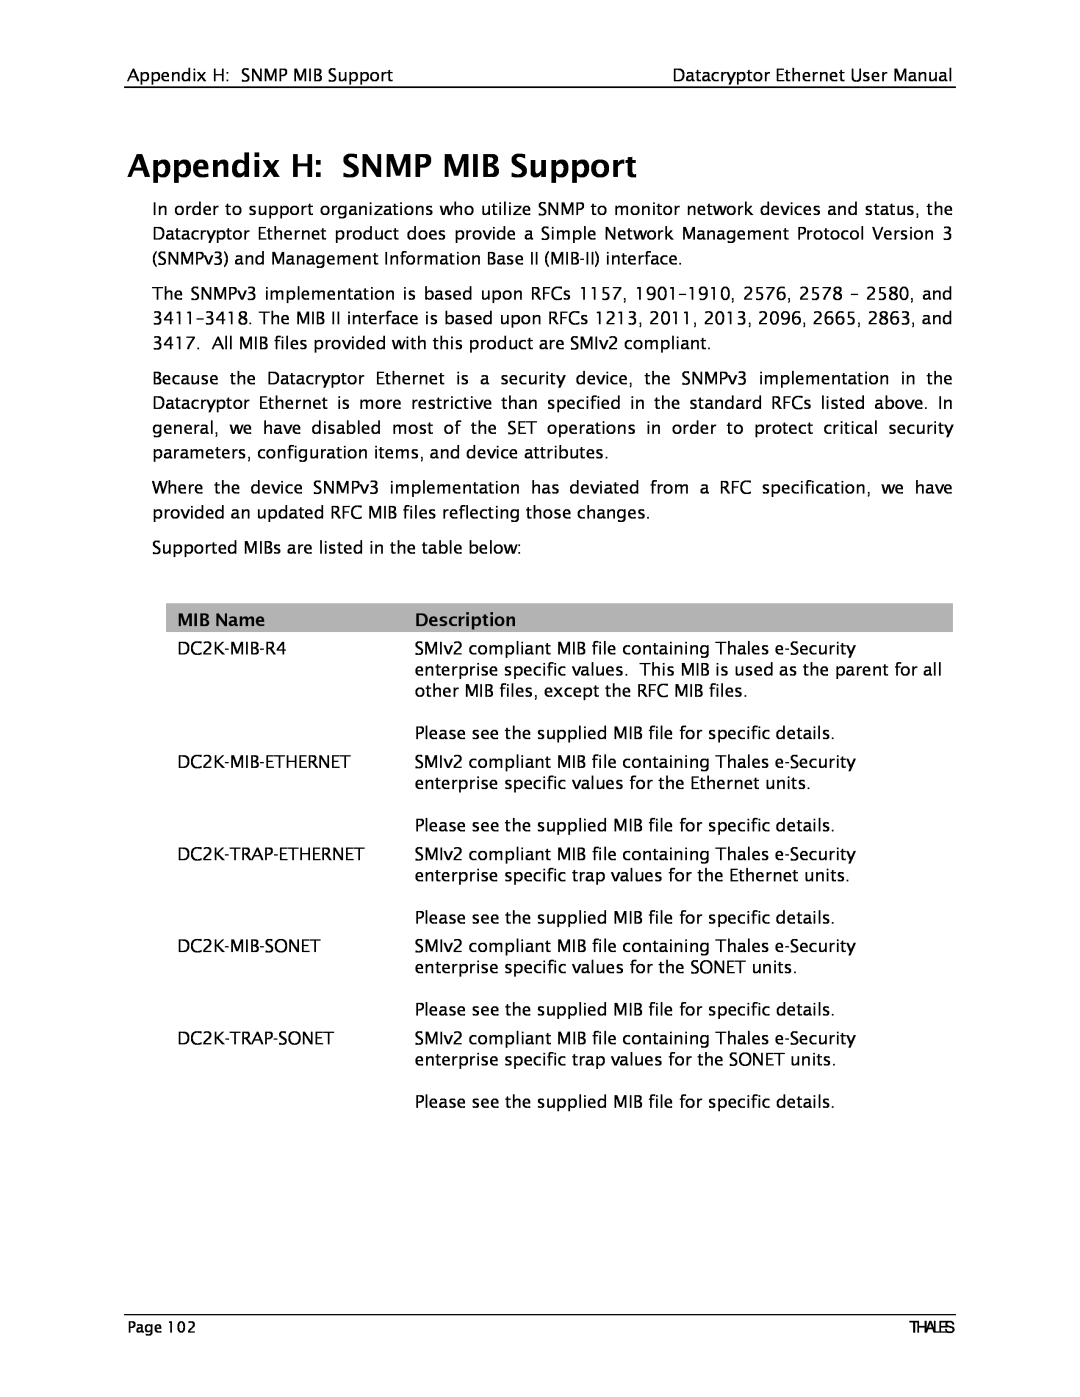 Angenieux 1270A450-005 user manual Appendix H SNMP MIB Support, MIB Name, Description 